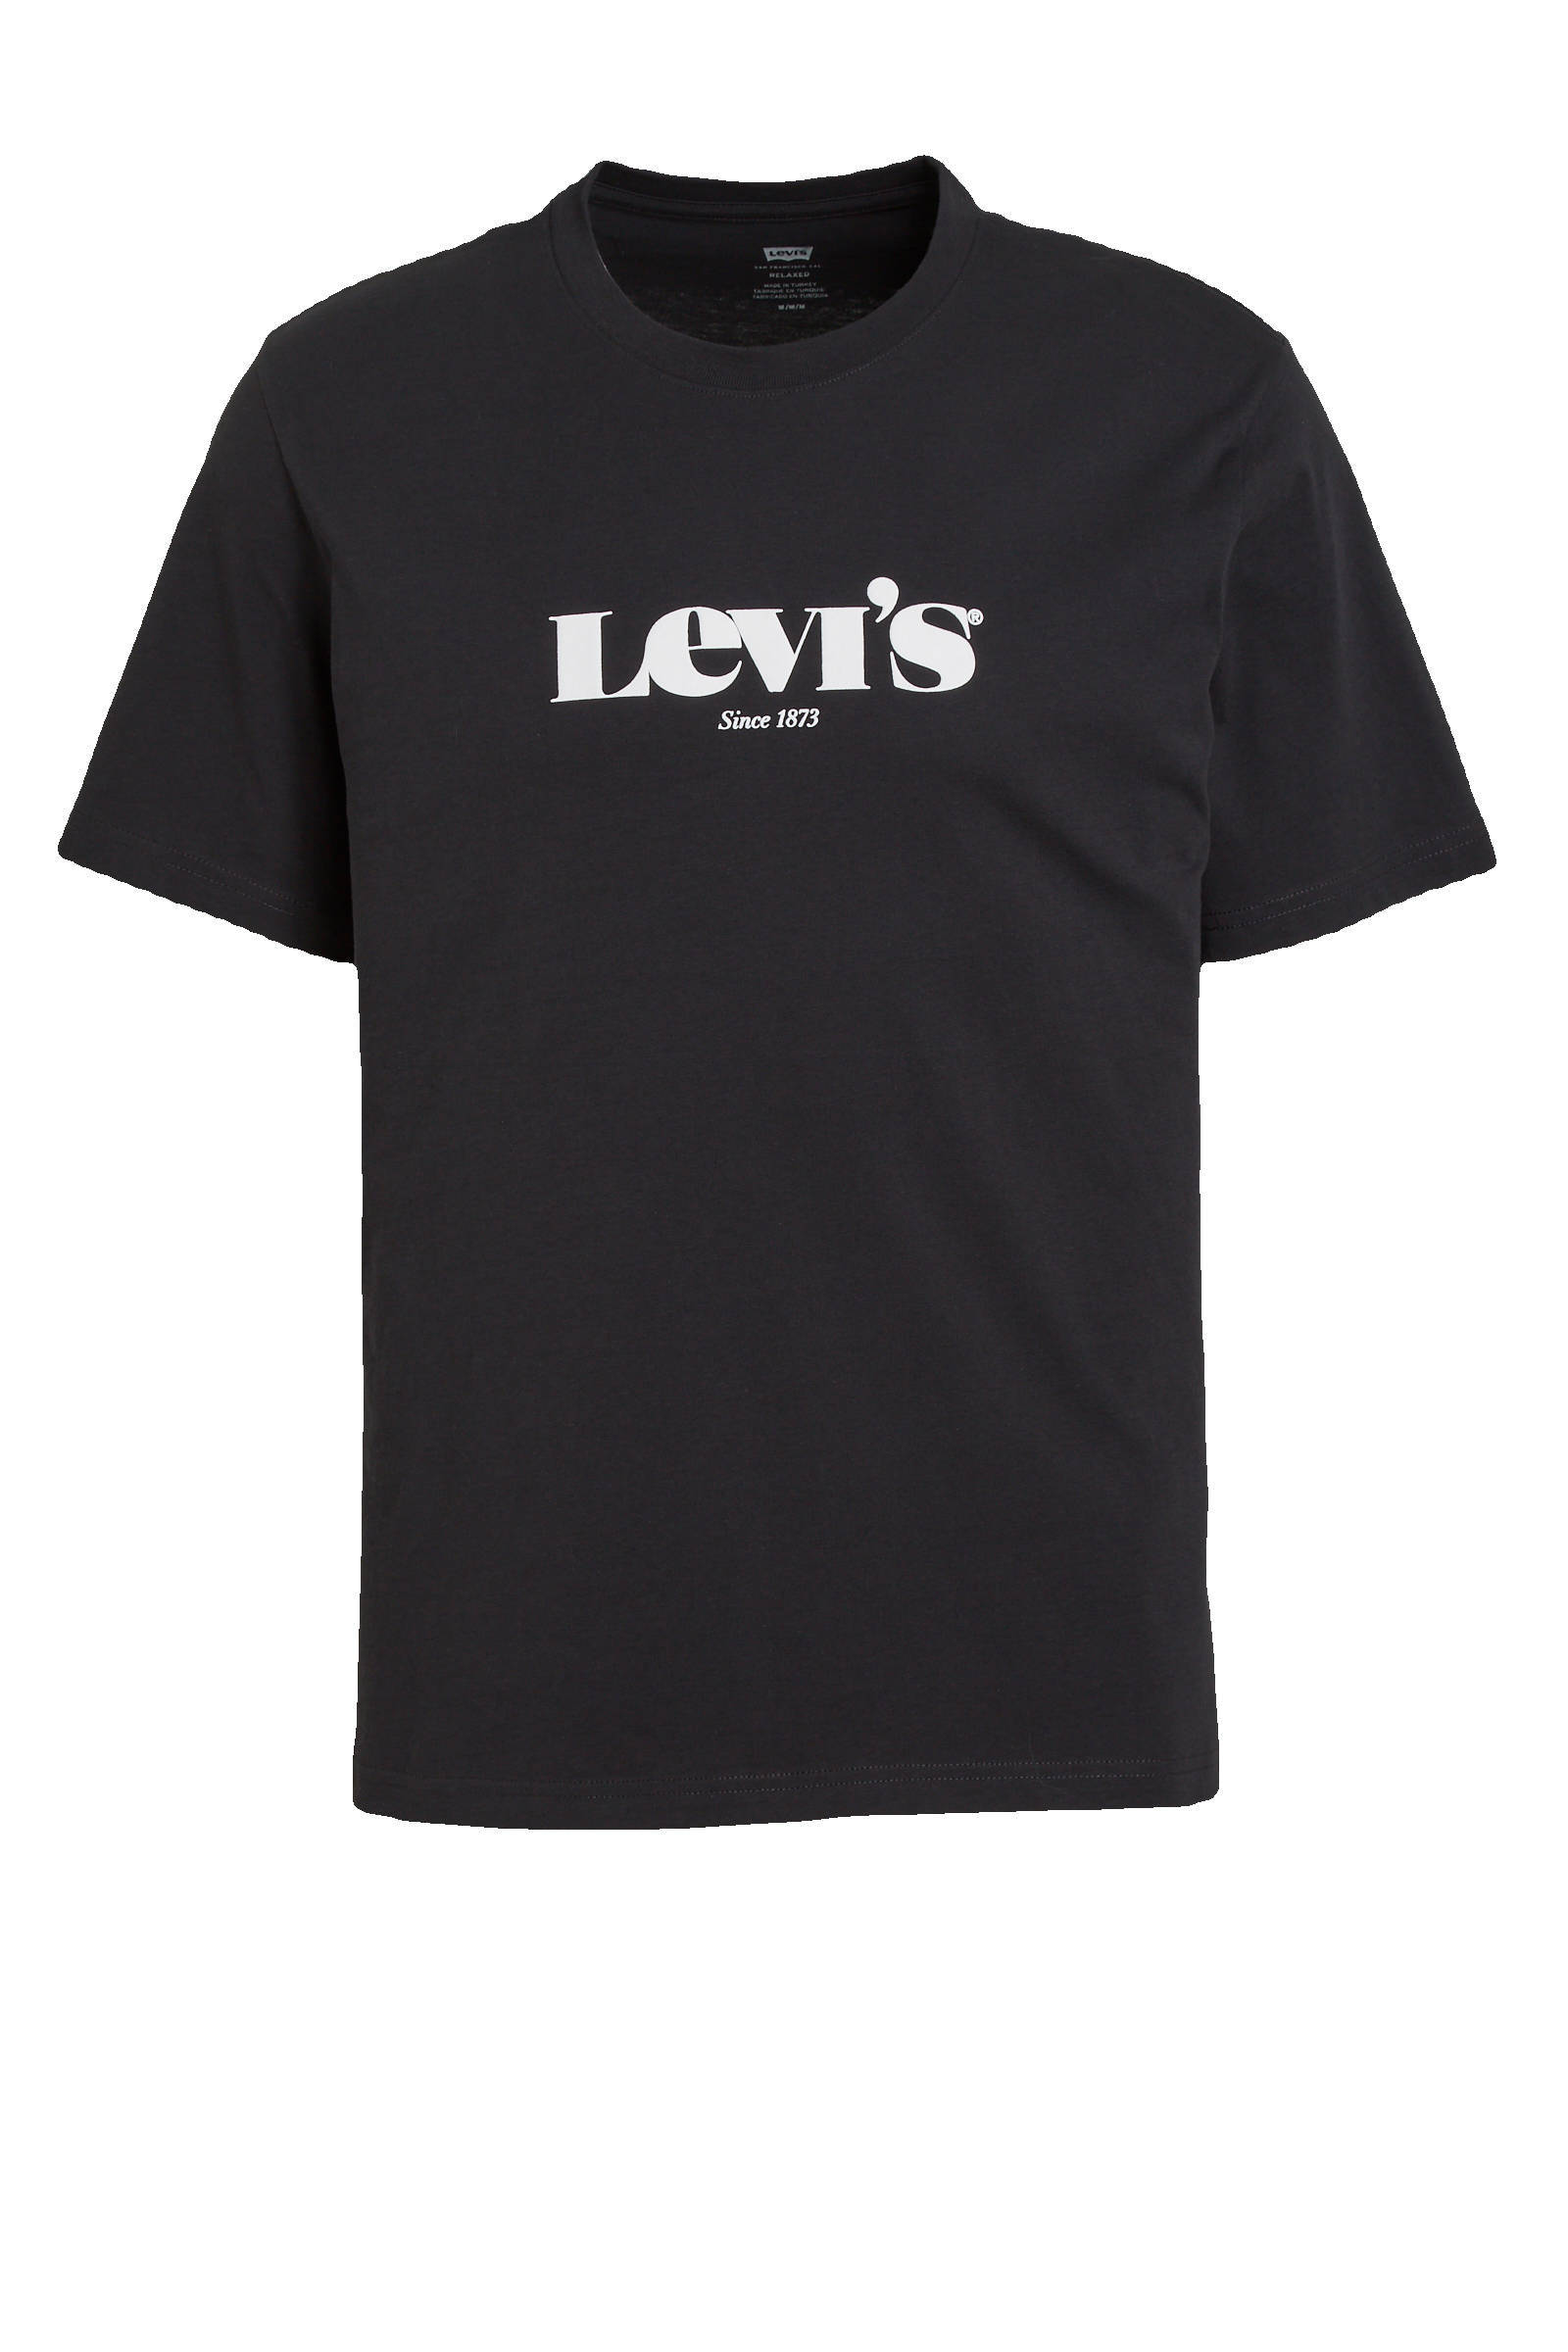 levis t shirt small logo